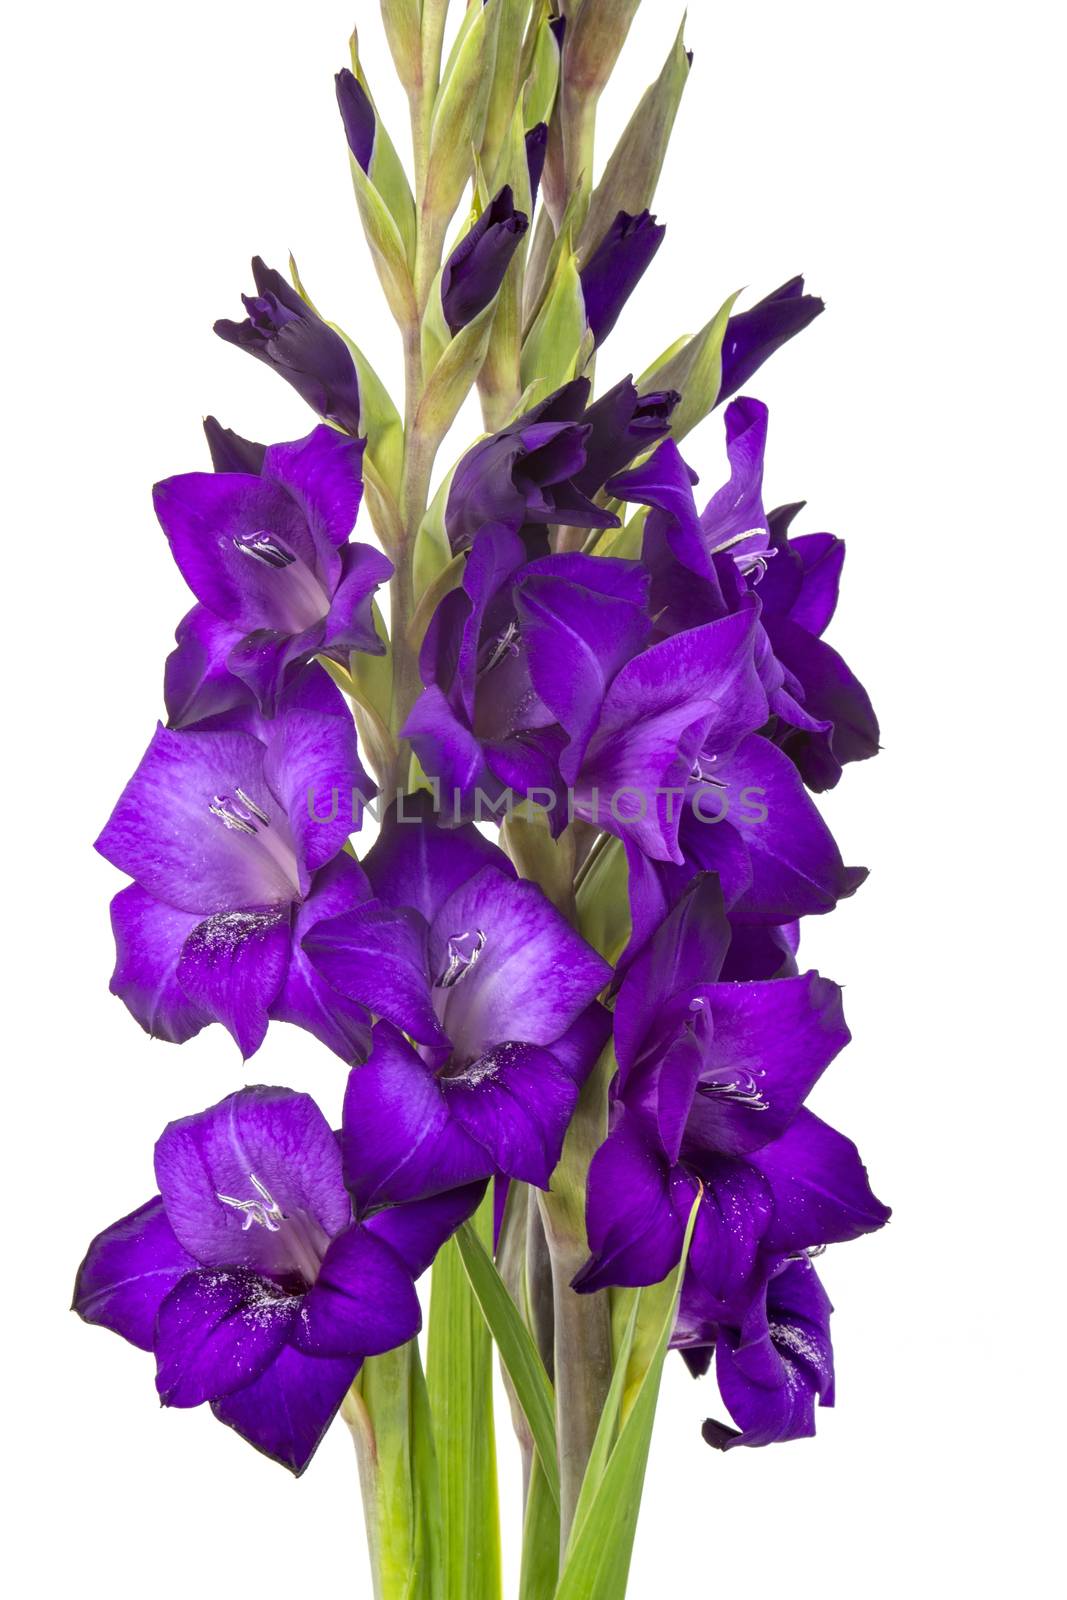 purple gladiolus flowers on white background